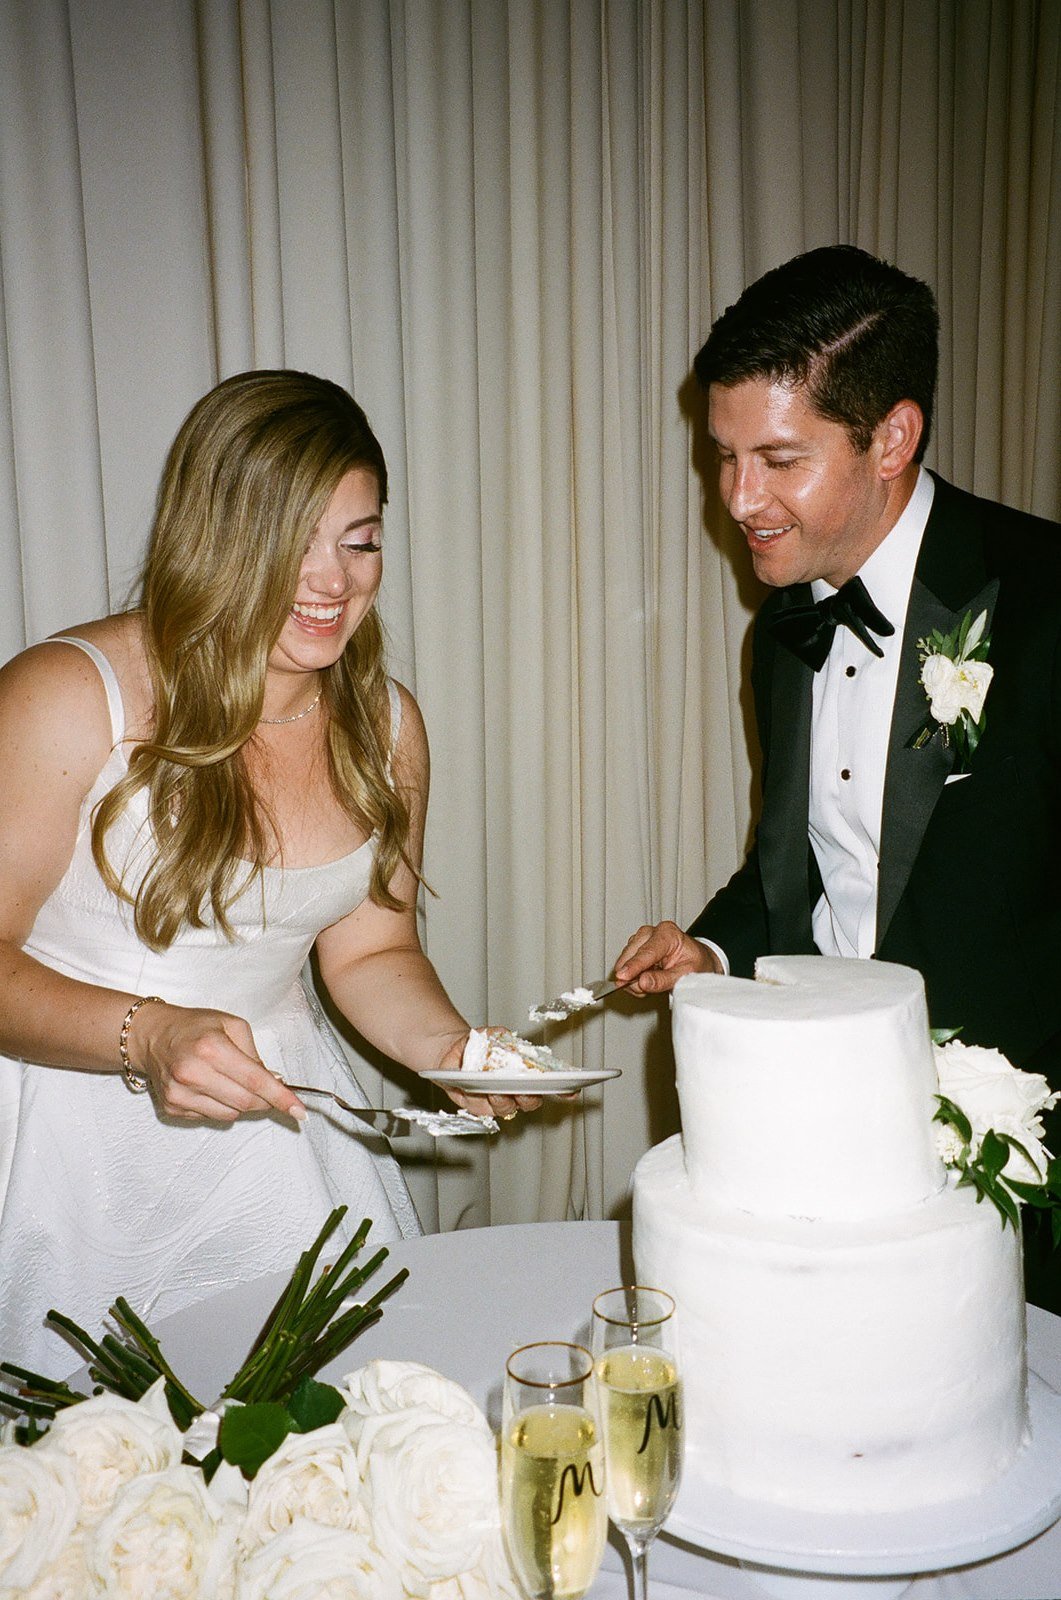 Bride and groom cutting wedding cake on film